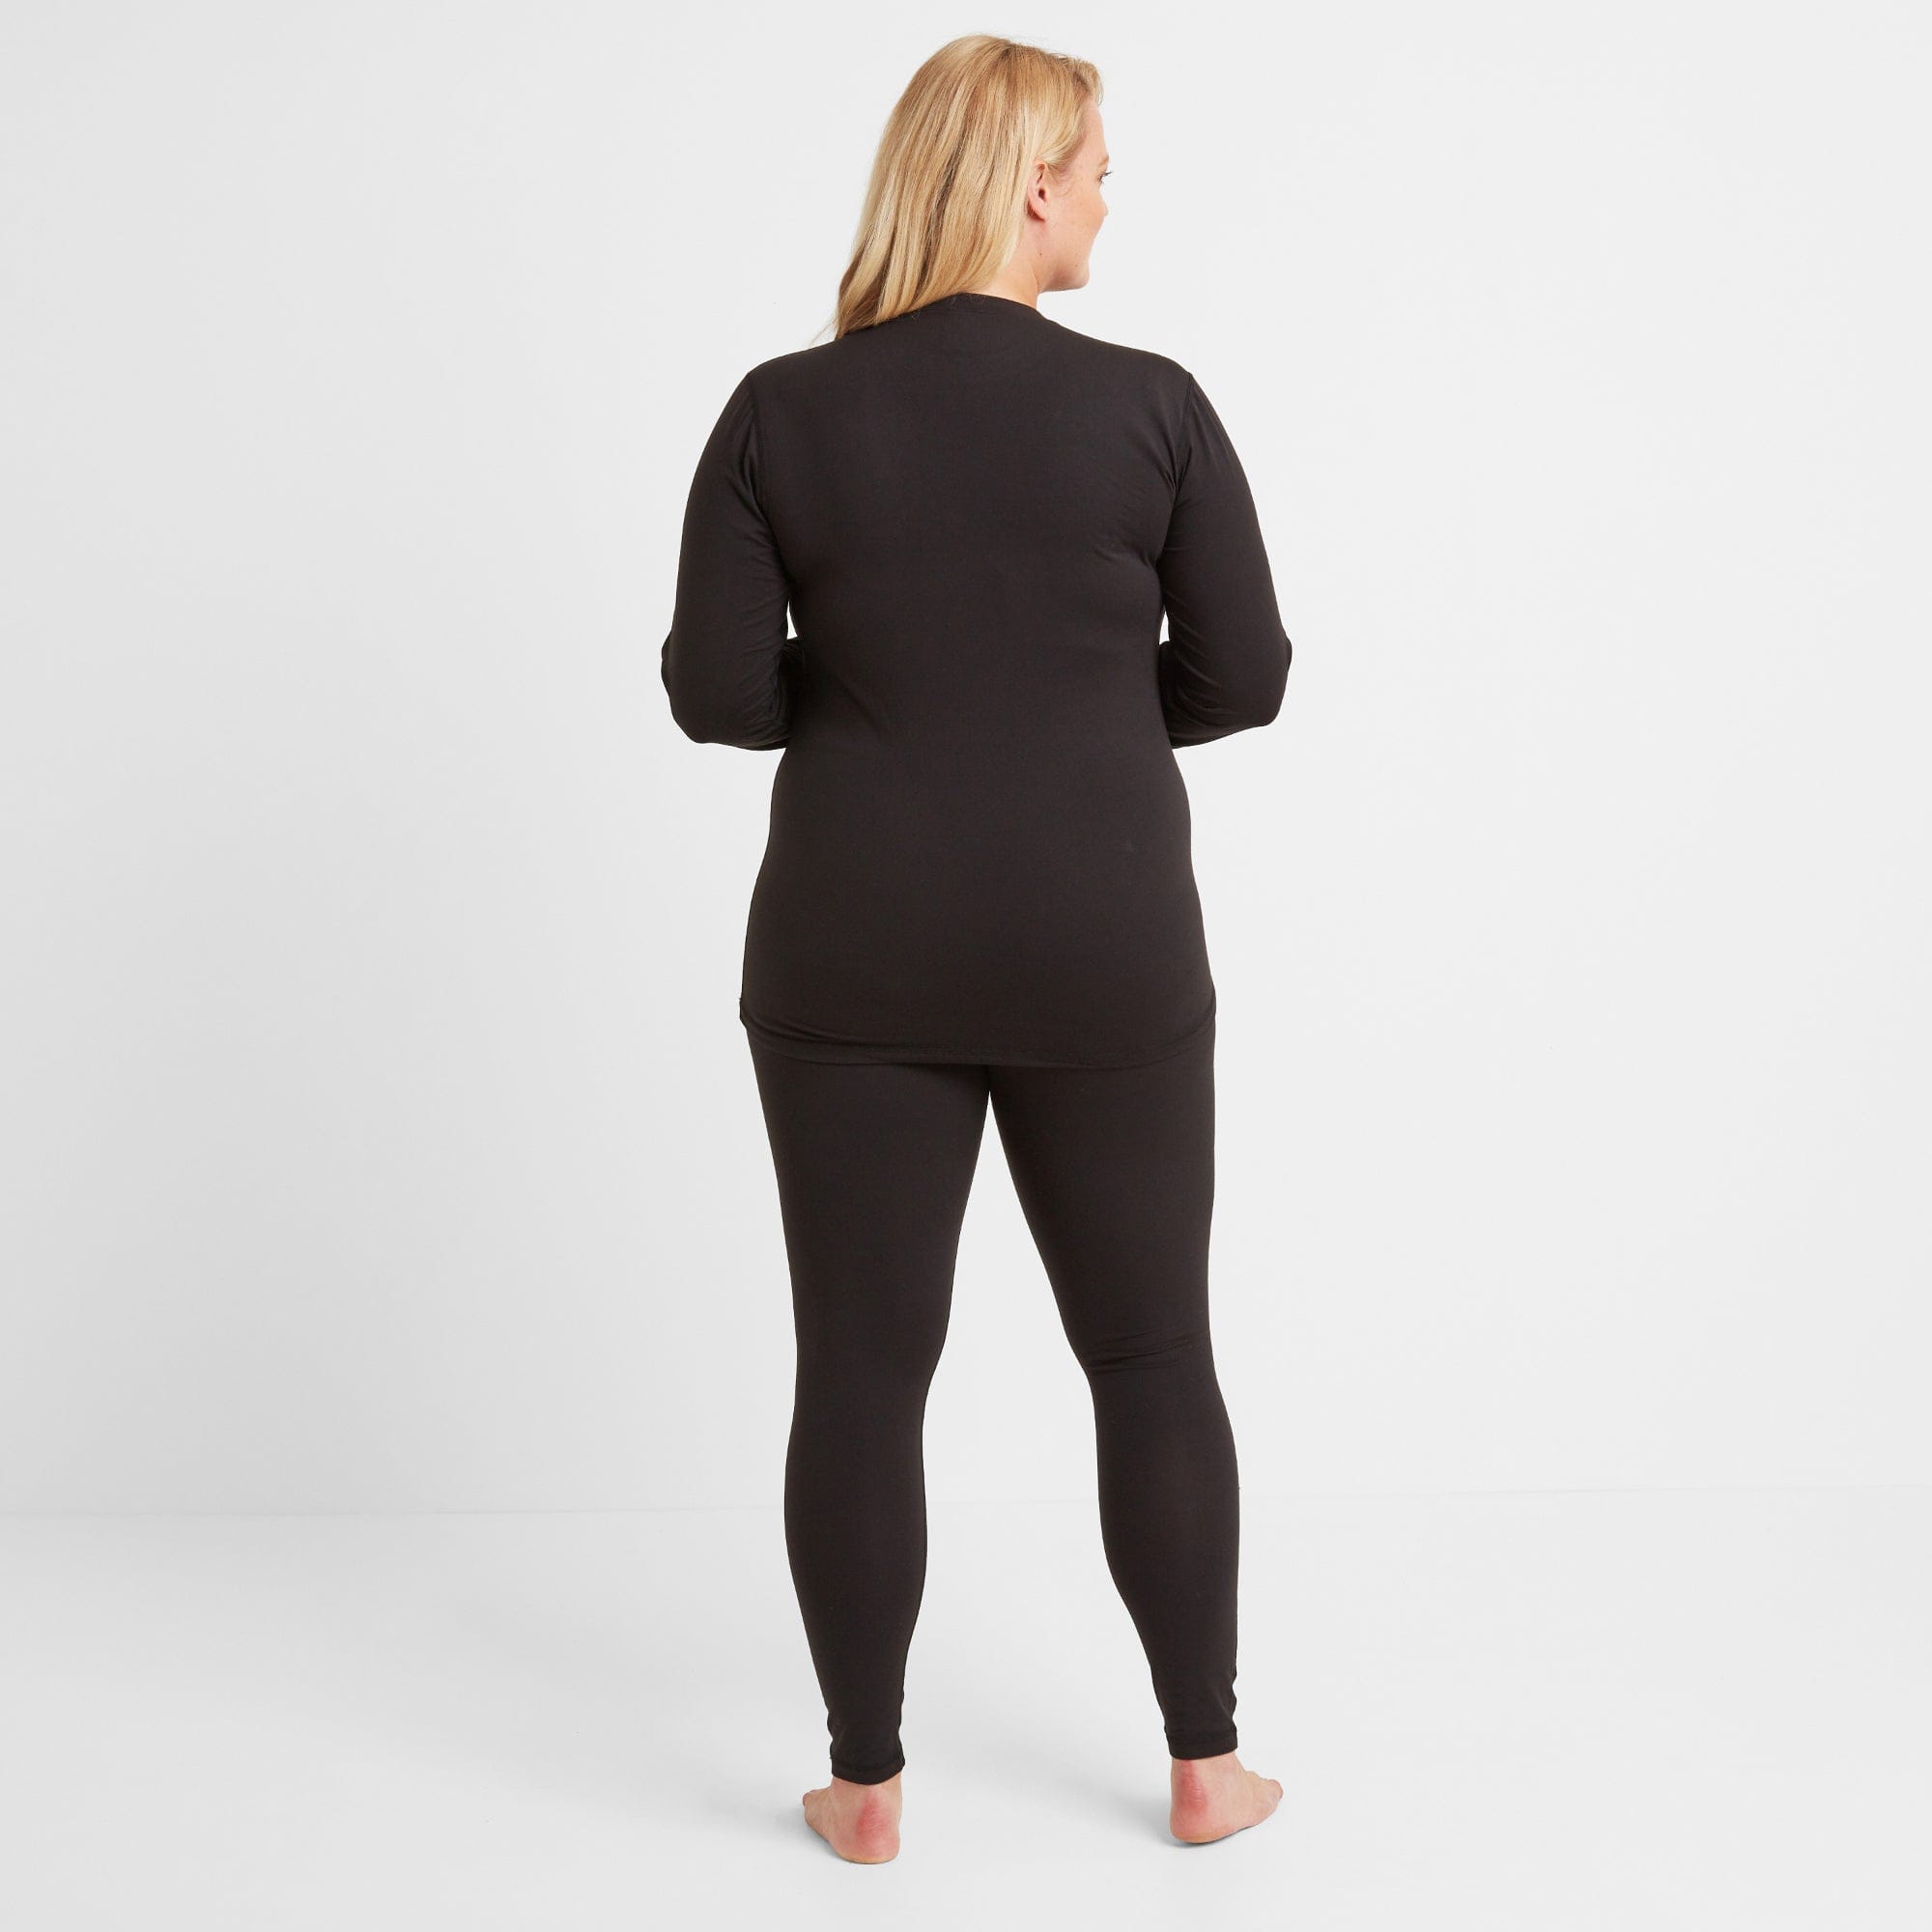 Women's Plus Size Thermal Underwear Set Long Slim Fit Base Layer